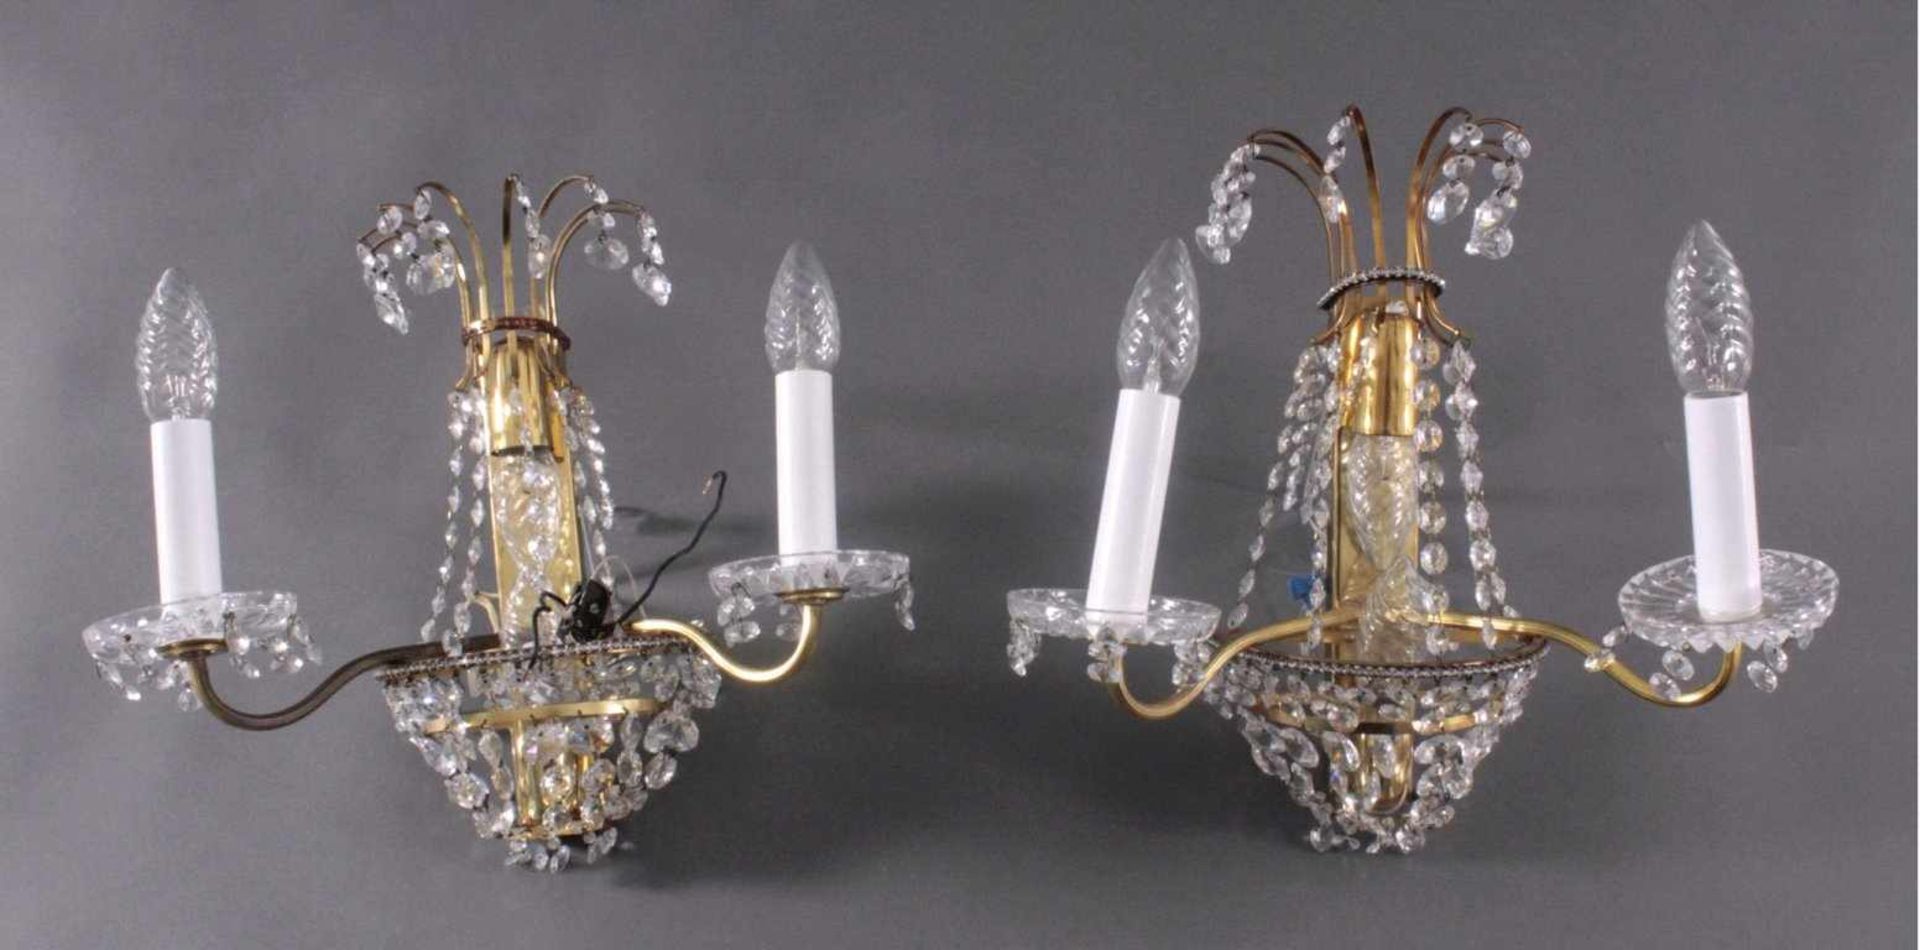 Paar WandlampenMessing mit Kristallbehang, 4-flammig, ca. H-32 x 38 cm.Fehlteile, Funktion nicht